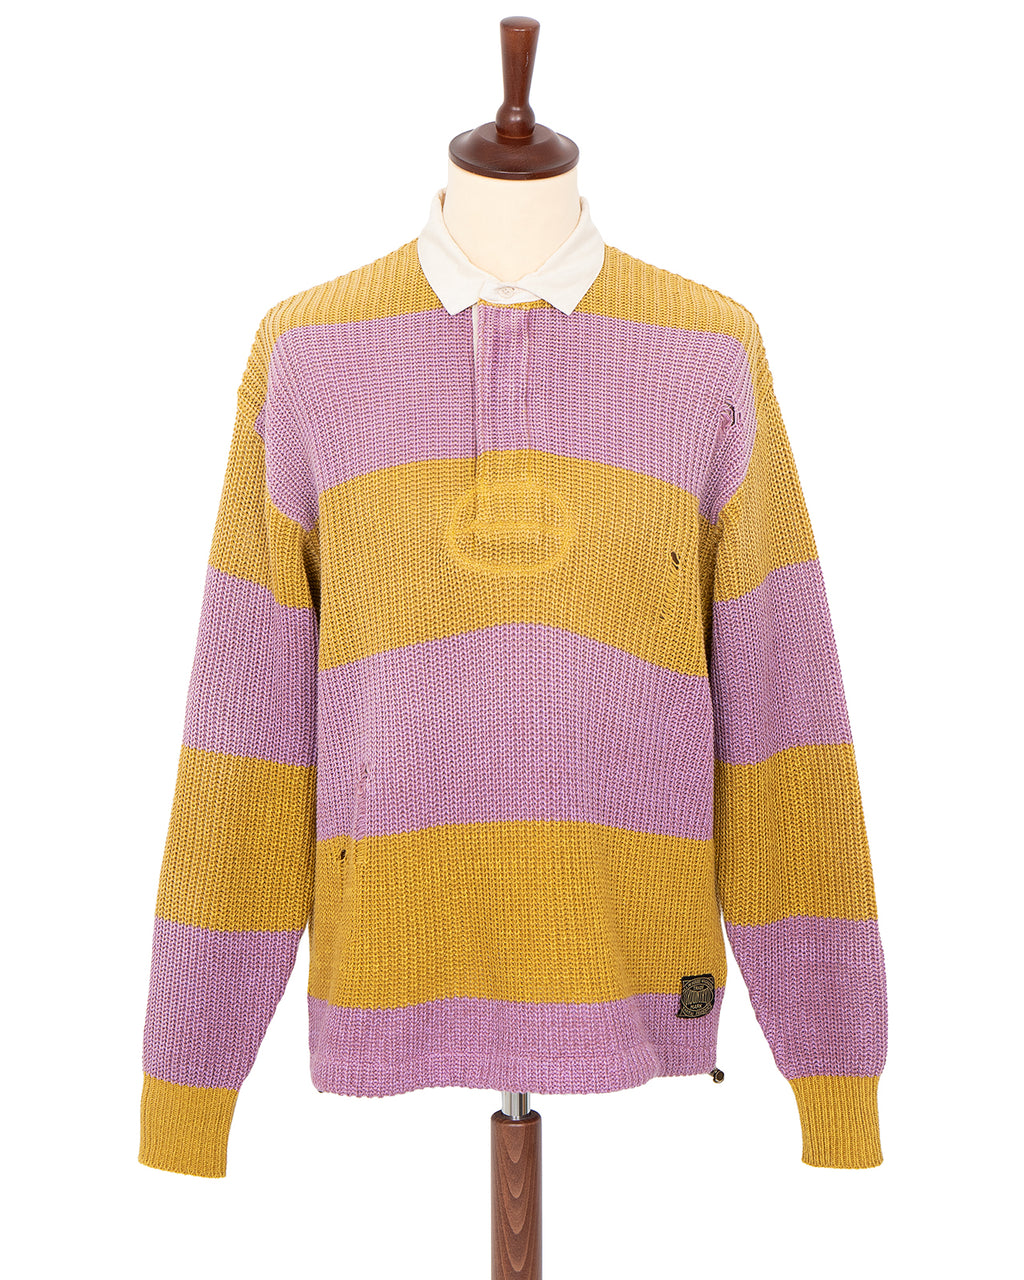 Kapital 5G Cotton Knit Rugger Shirt, Yellow / Pink